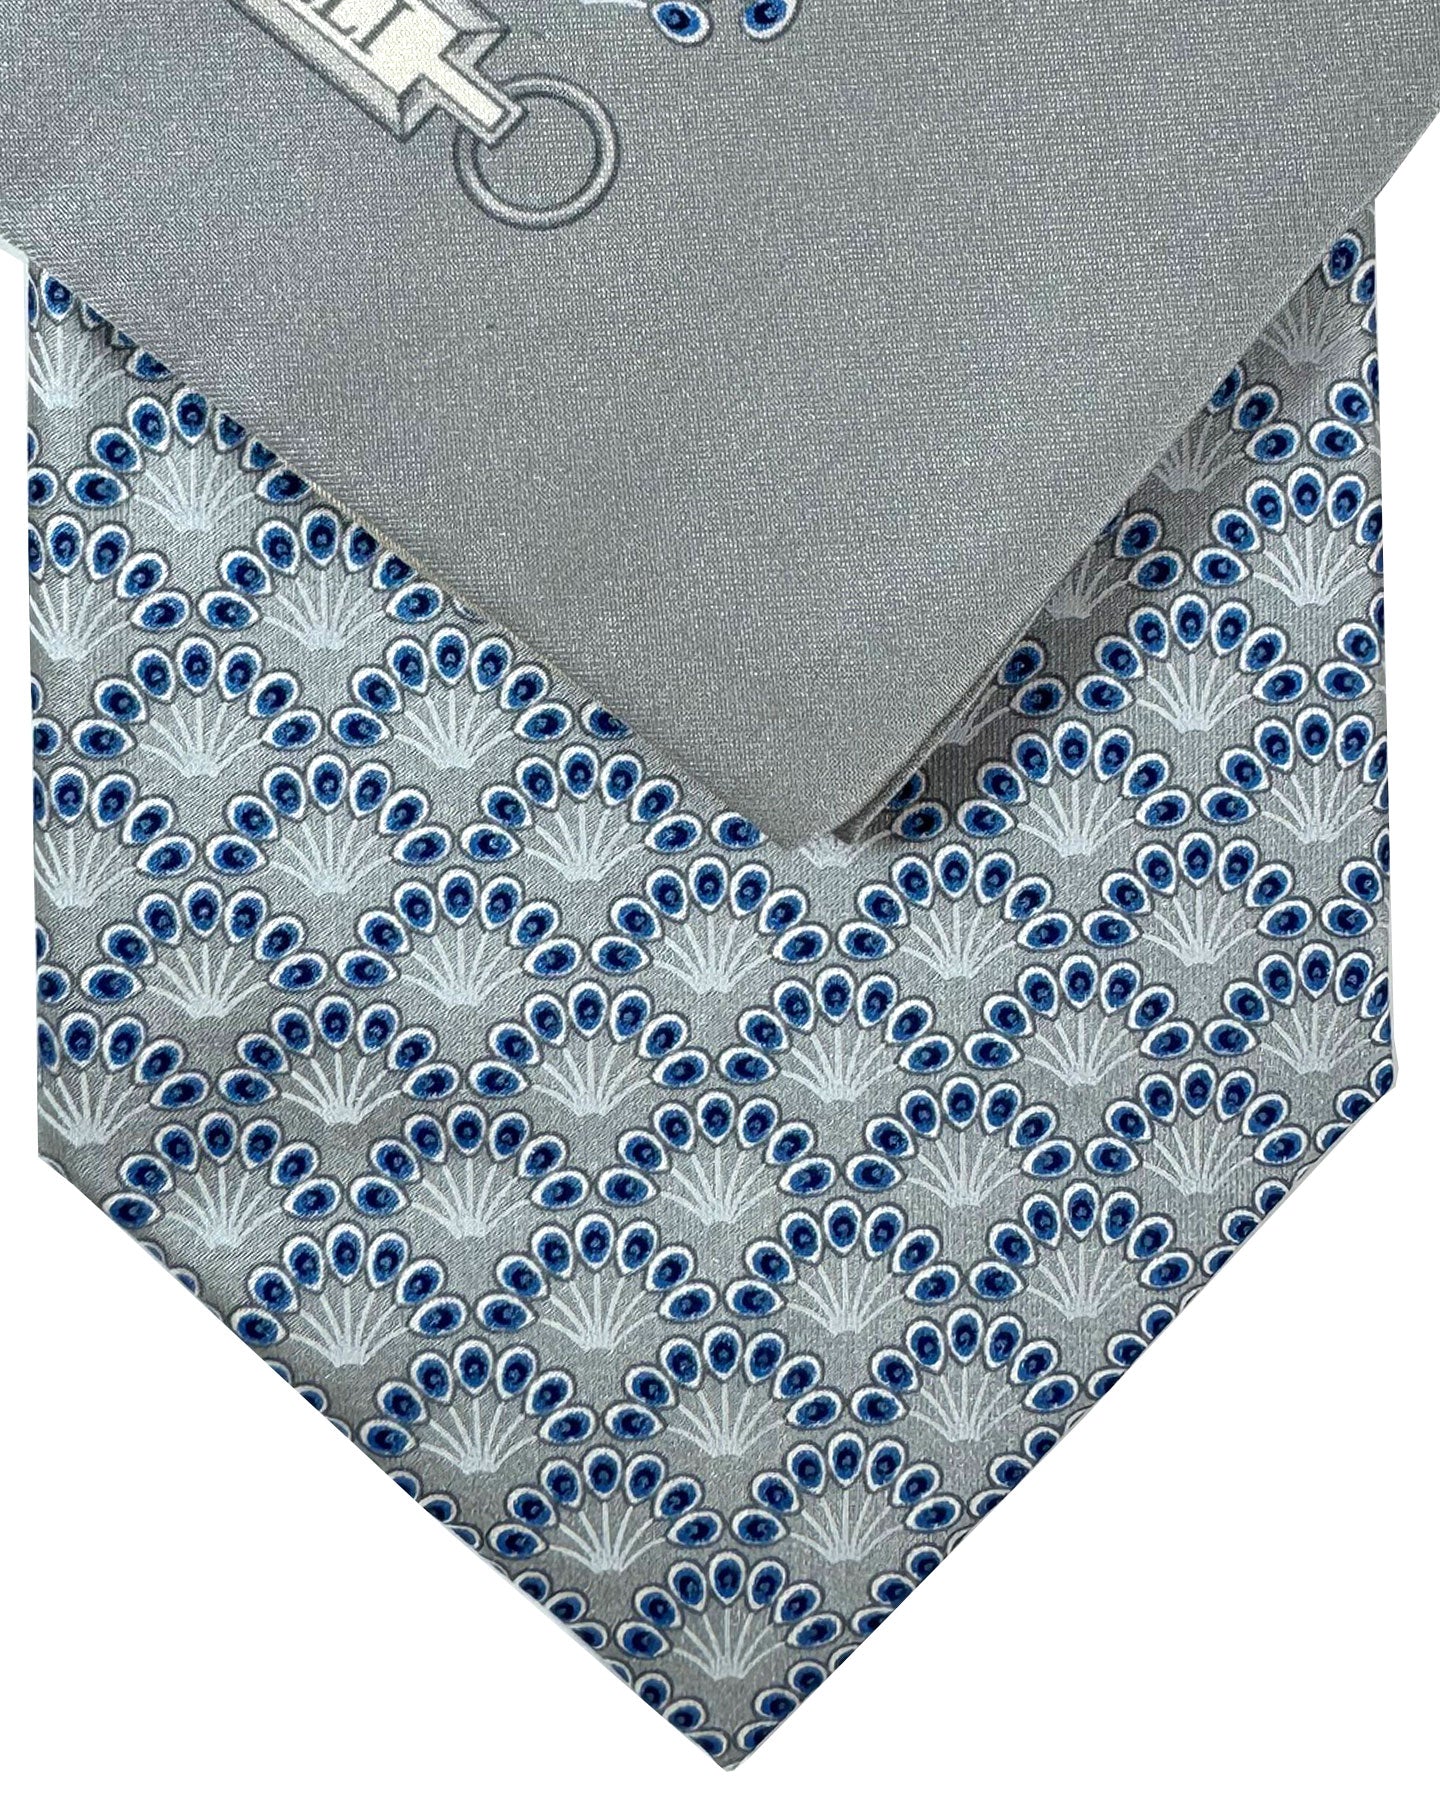 Zilli Tie & Matching Pocket Square Set Gray Blue Design